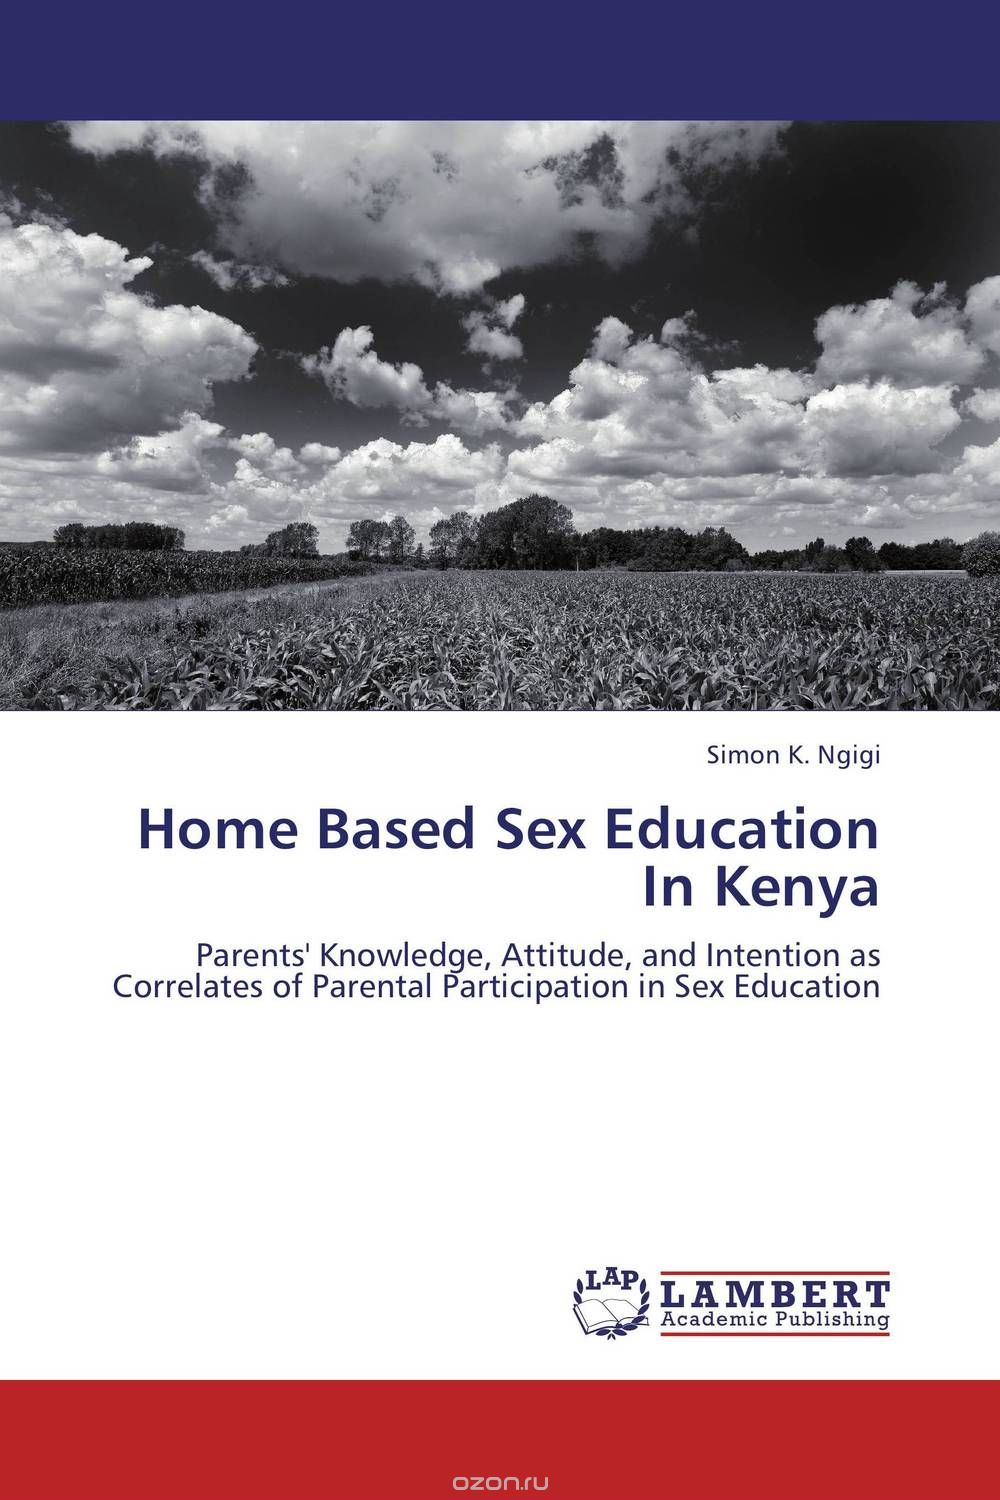 Скачать книгу "Home Based Sex Education In Kenya"